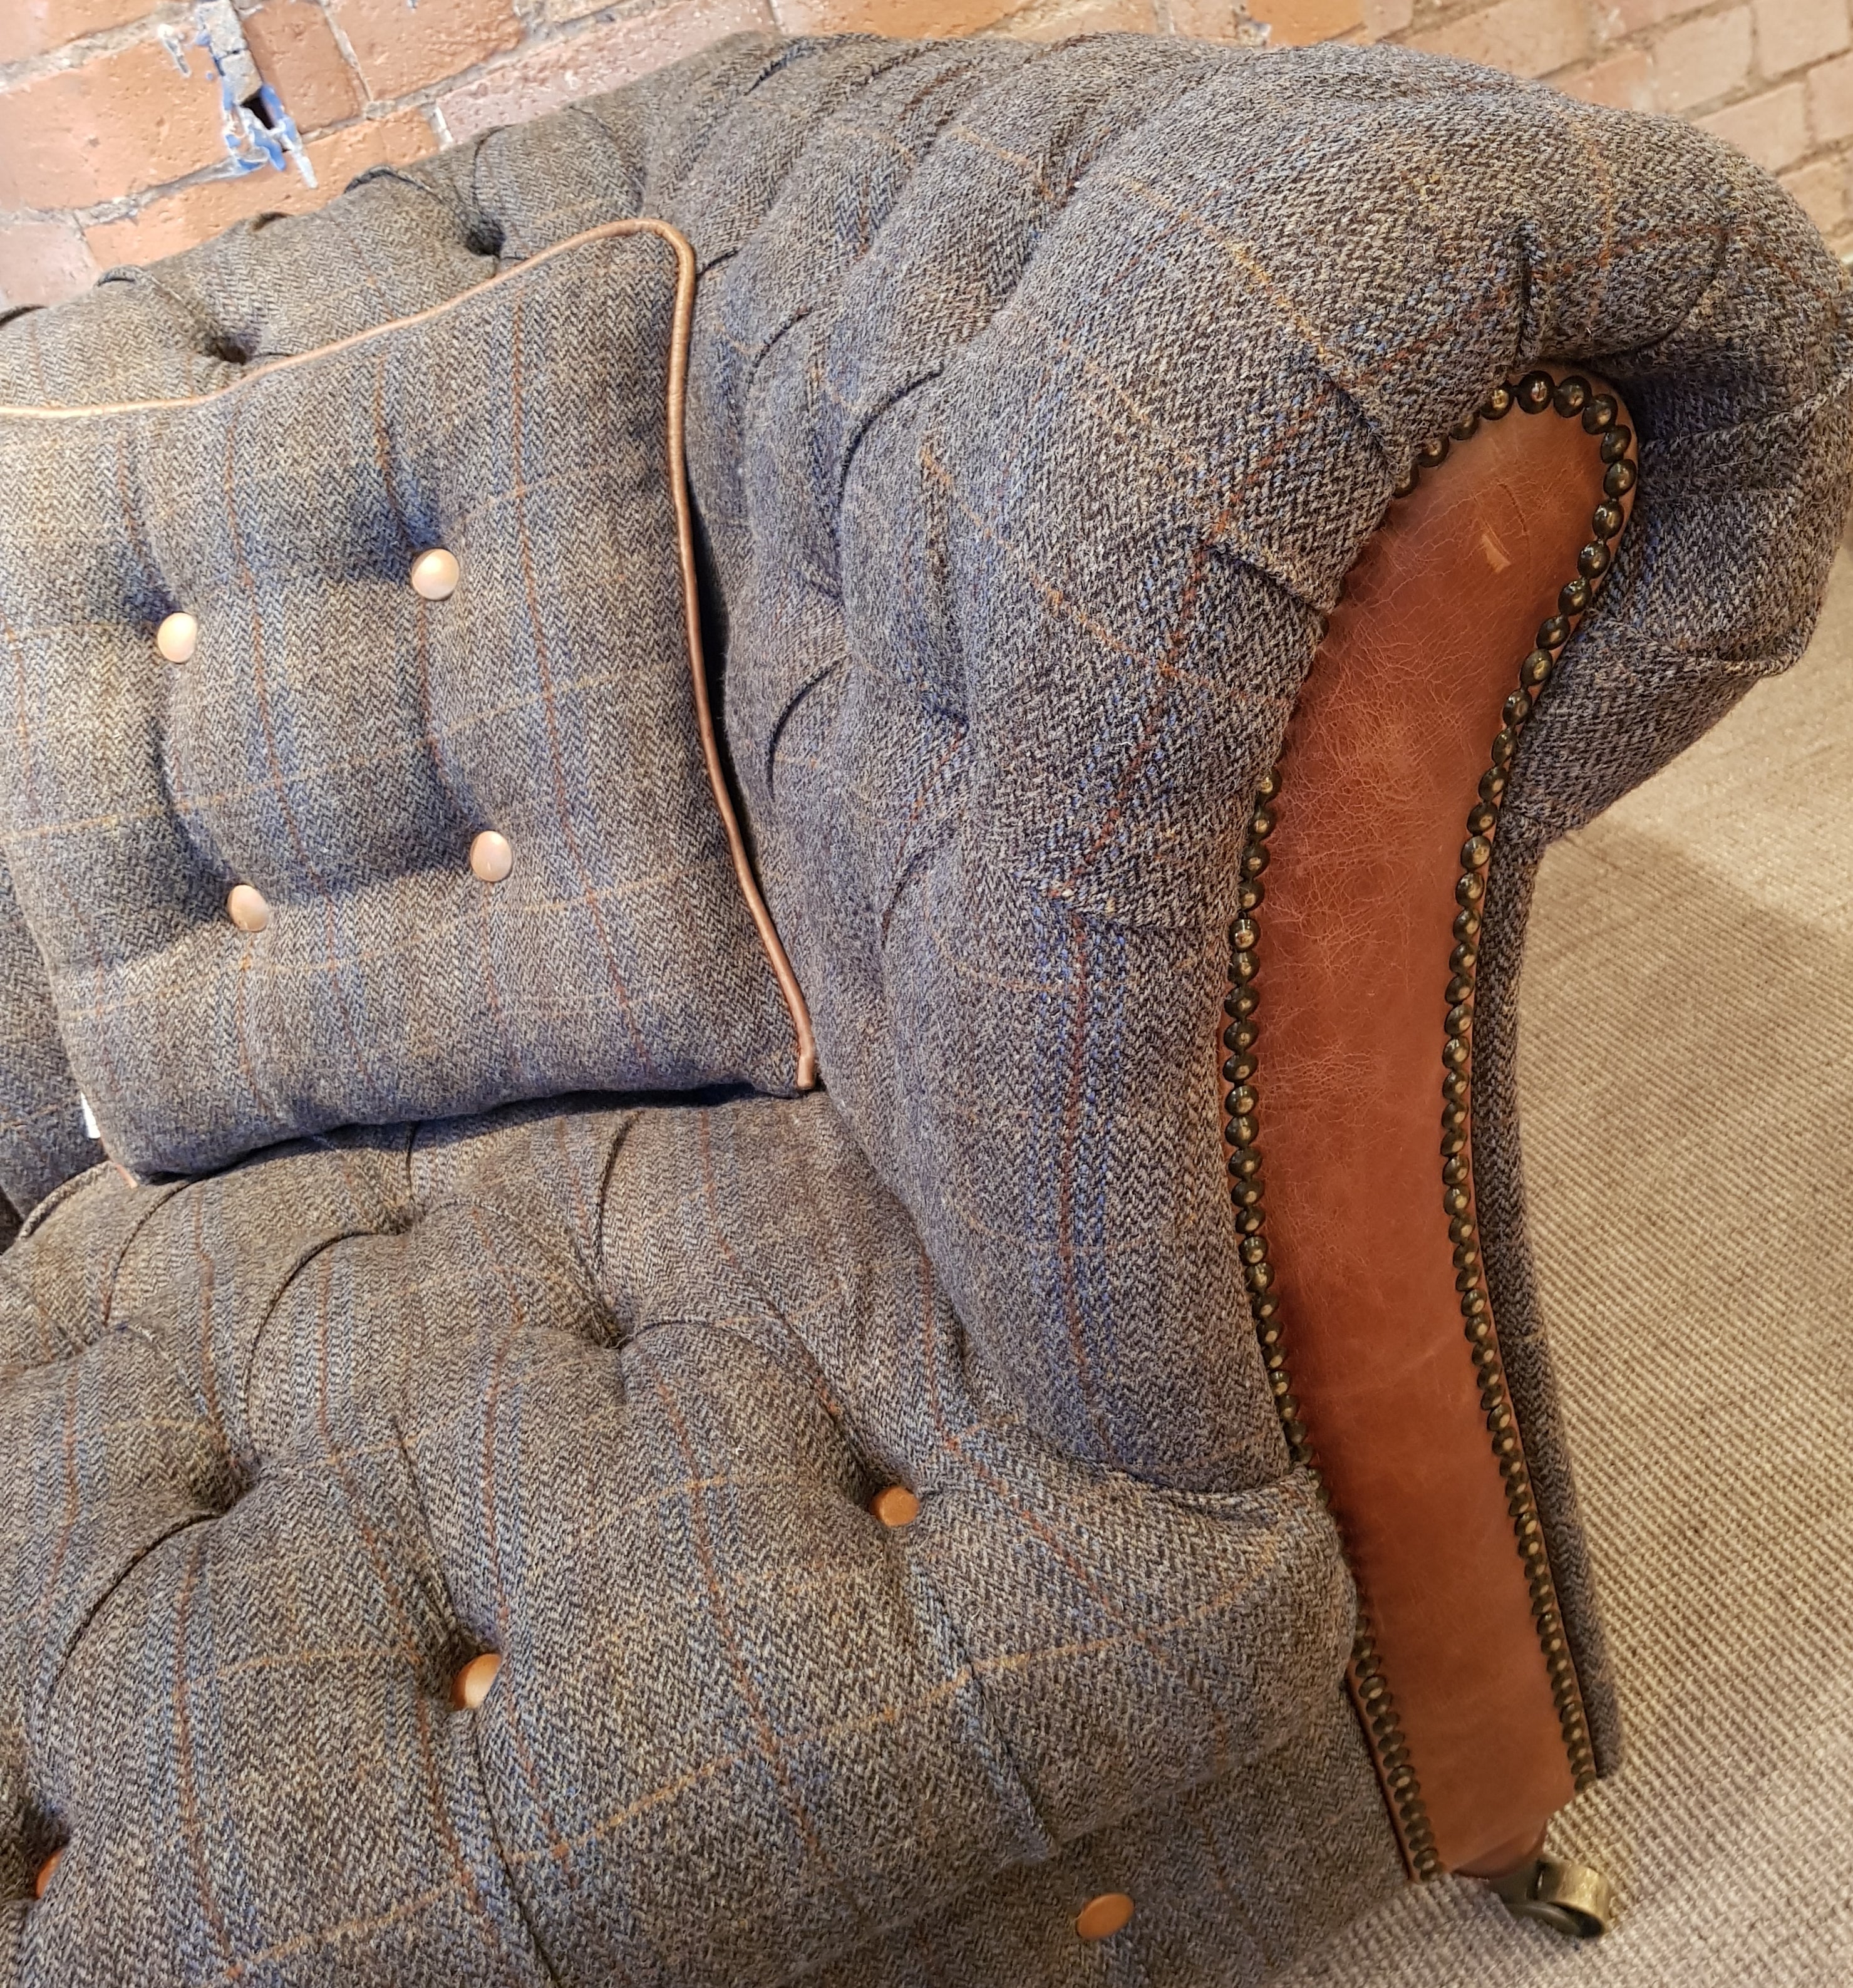 Chester Club Harris Tweed and Leather Chair.-harris tweed armchairs-Carlton Vintage-Against The Grain Furniture